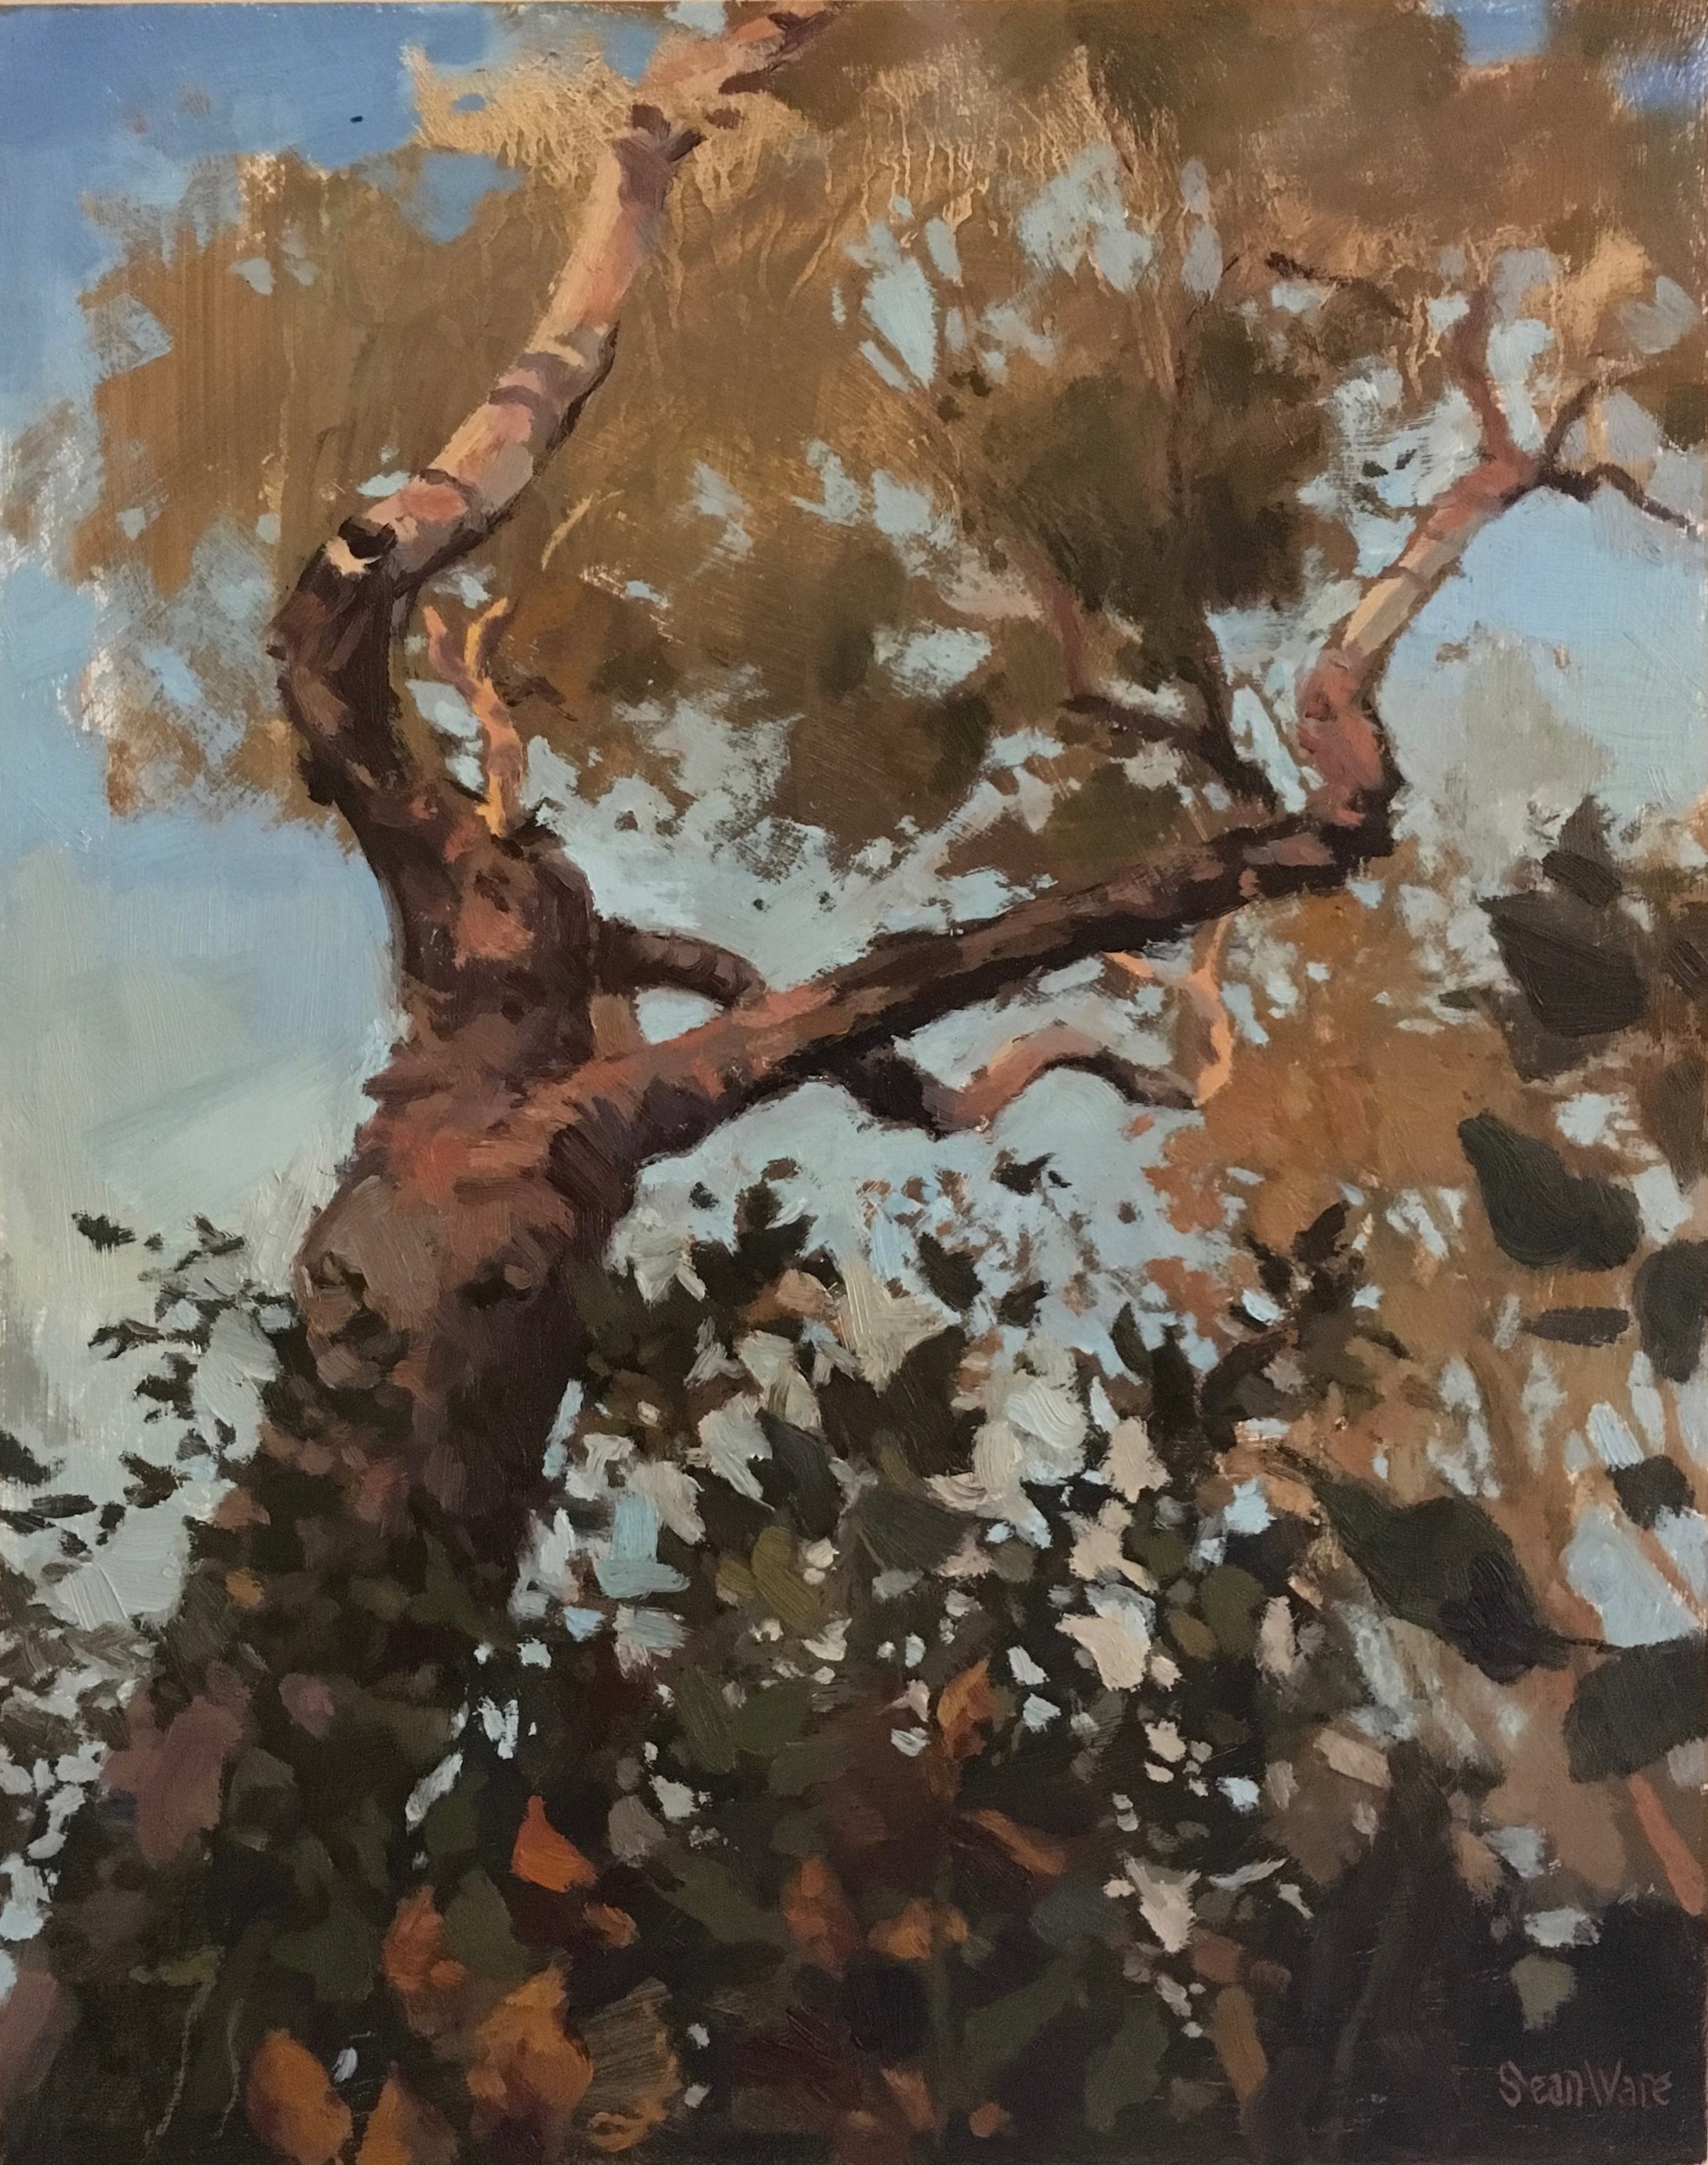 Blush & Fade, oil on panel, 11x14", 2016